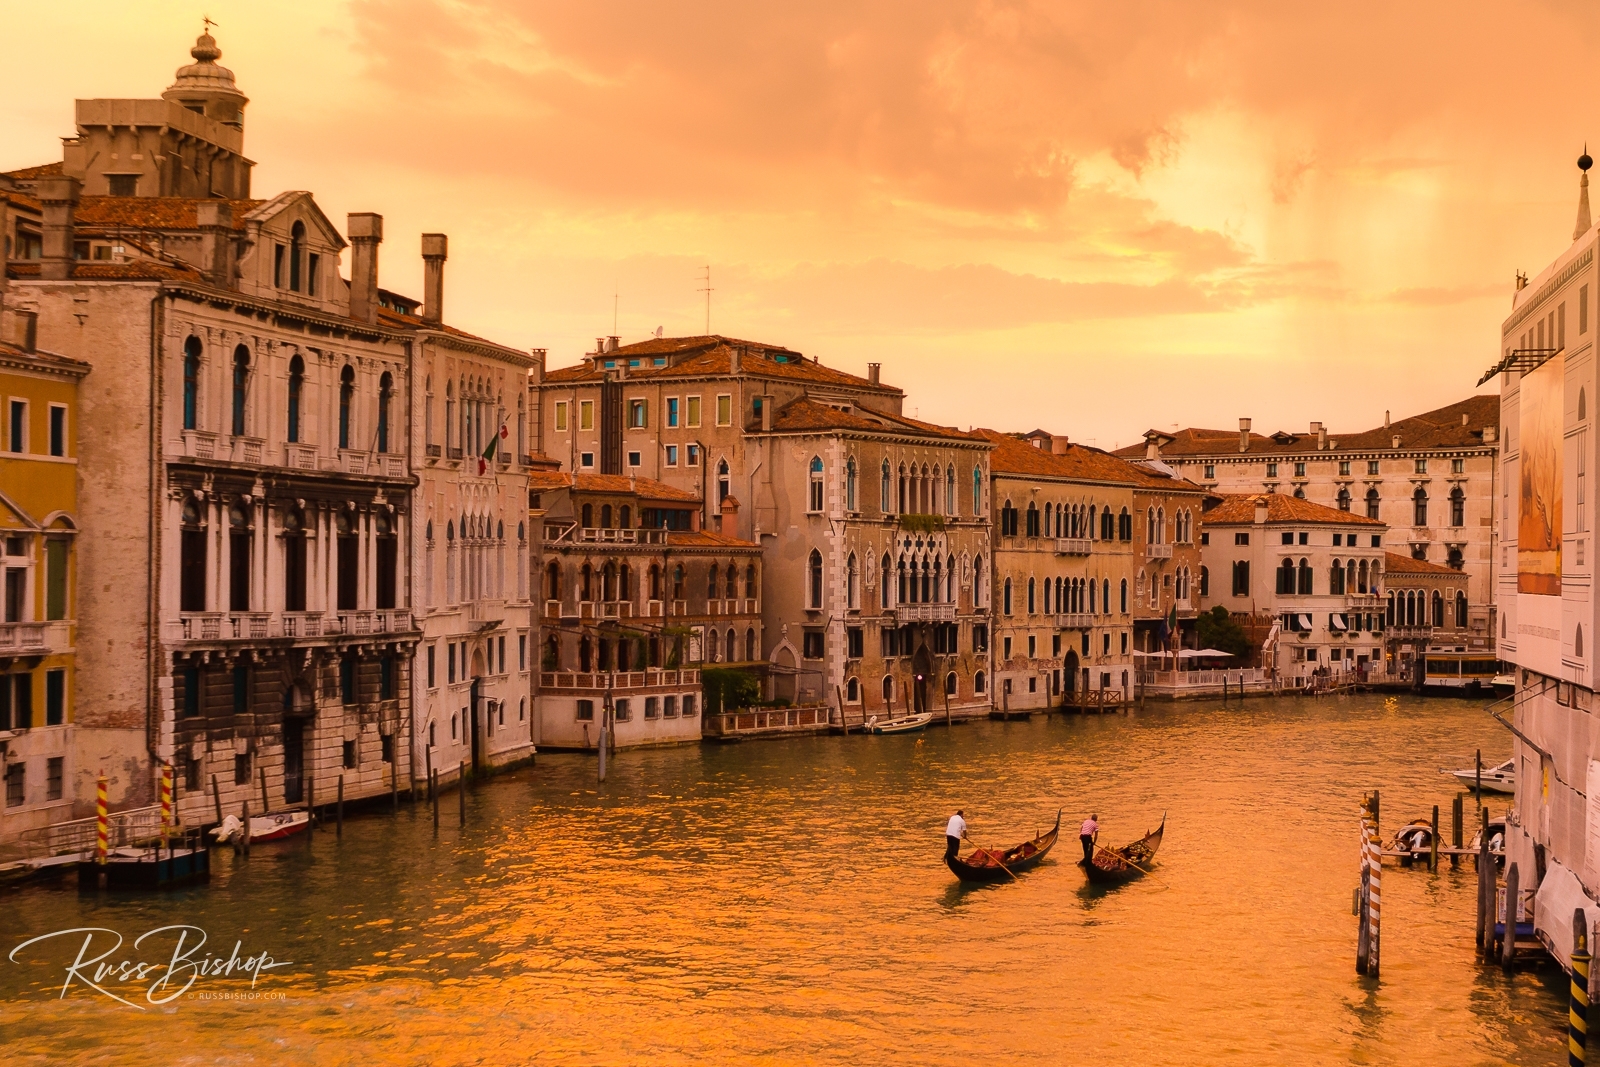 Watermark - Evening light and gondolas on the Grand Canal, Venice, Veneto, Italy